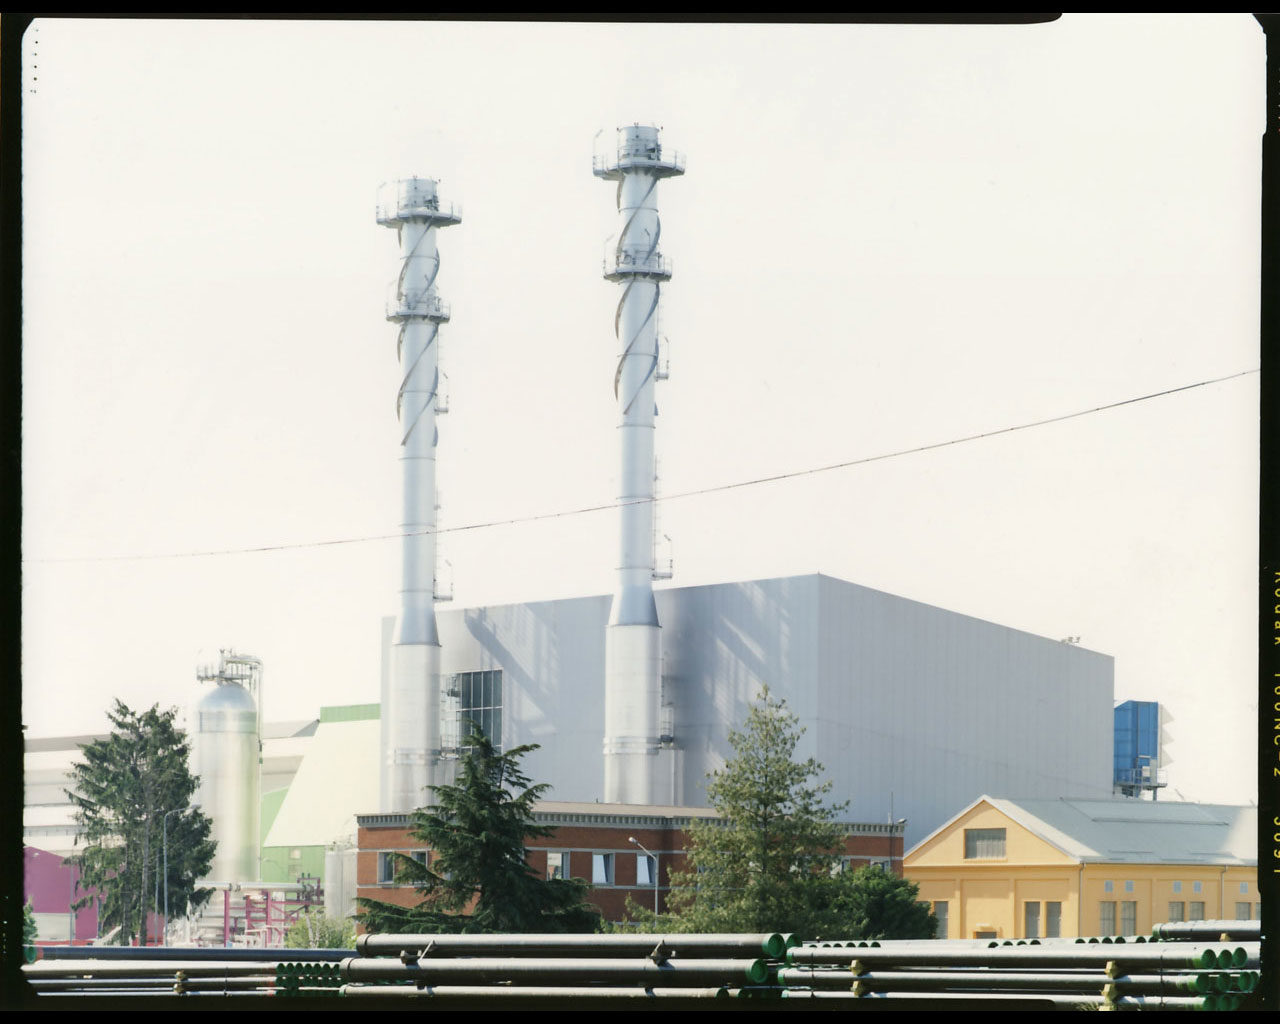 Tenaris Thermoelectric Power Plant, Dalmine, Italy